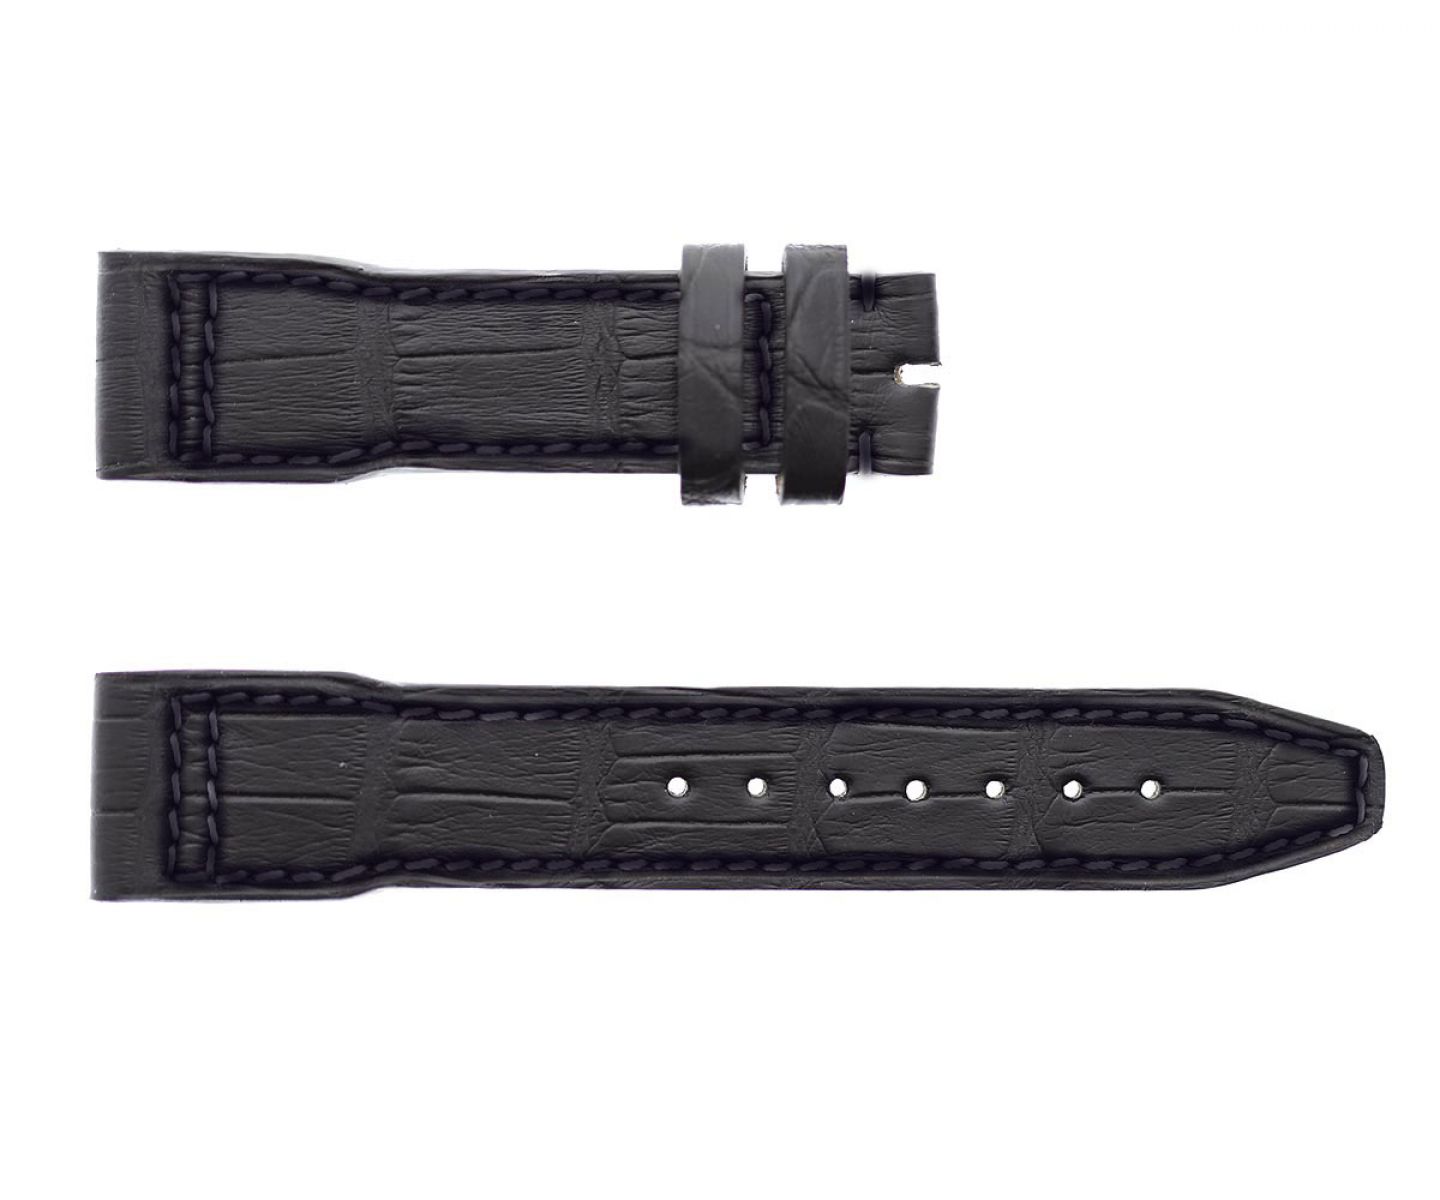 Black Alligator leather strap 20mm for IWC Big Pilot watch. Black Stitching